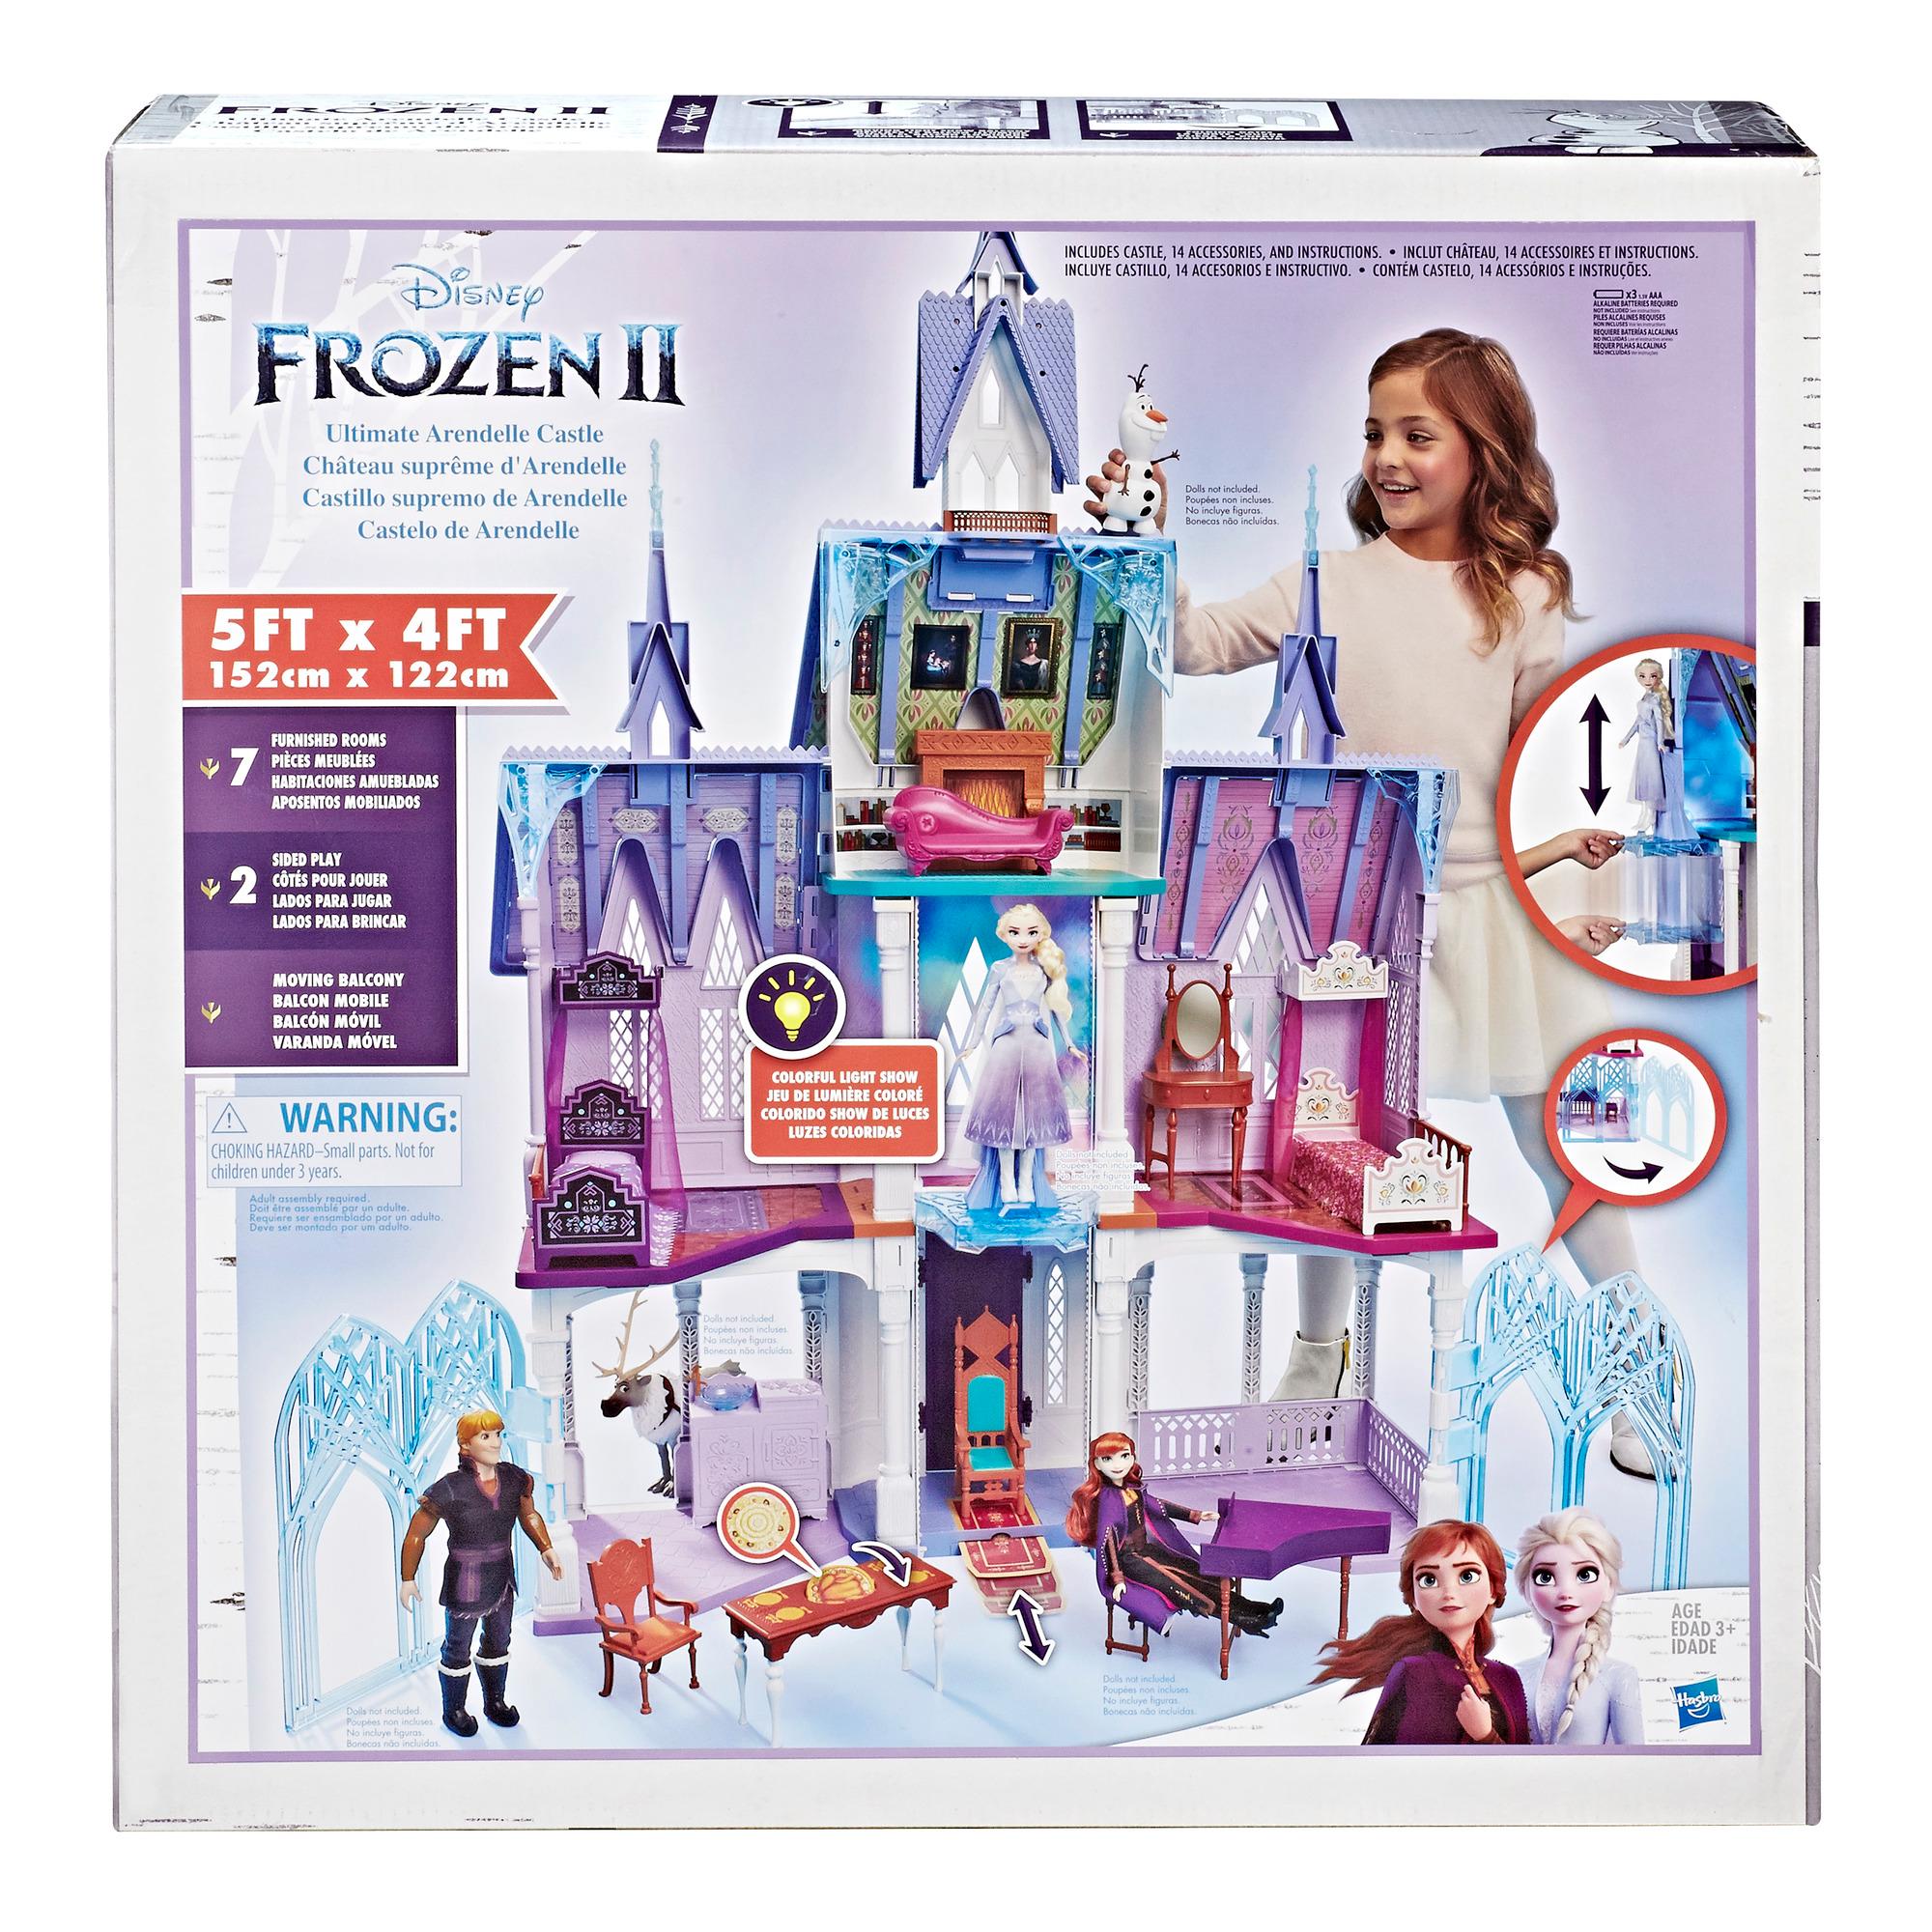 Hasbro Disney Frozen Ultimate Arendelle Castle Playset ฮาสโบร ดิสนี่ย์ โฟรเซ่น ปราสาทเอเรนเดล อัลติเมท เพลย์เซท สูง 150 ซม. ลิขสิทธิ์แท้